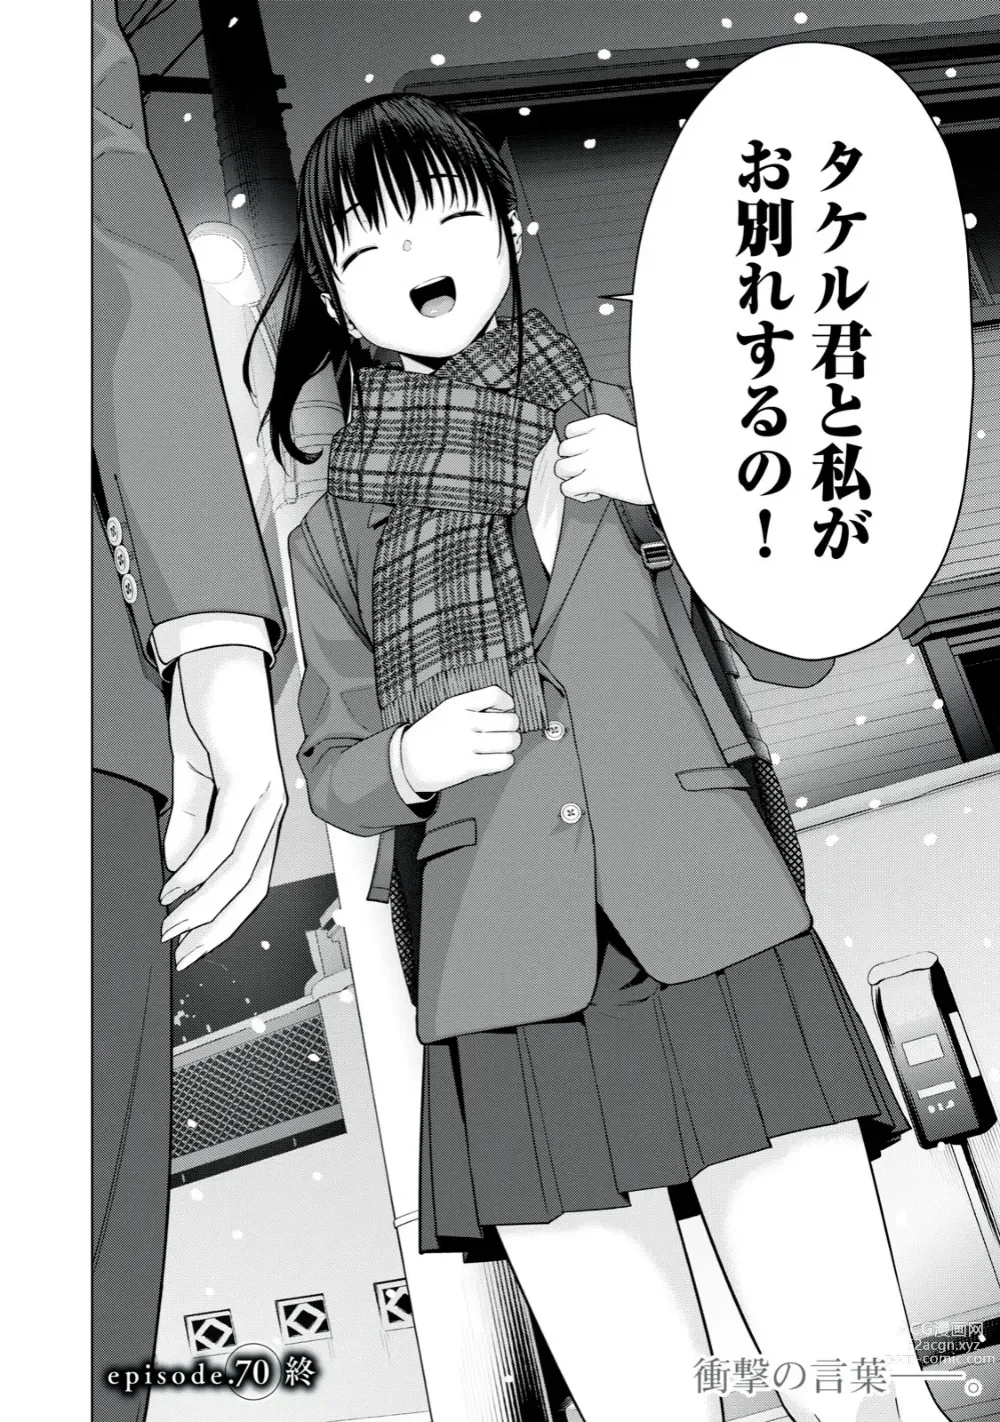 Page 578 of manga Kanojo no Tomodachi